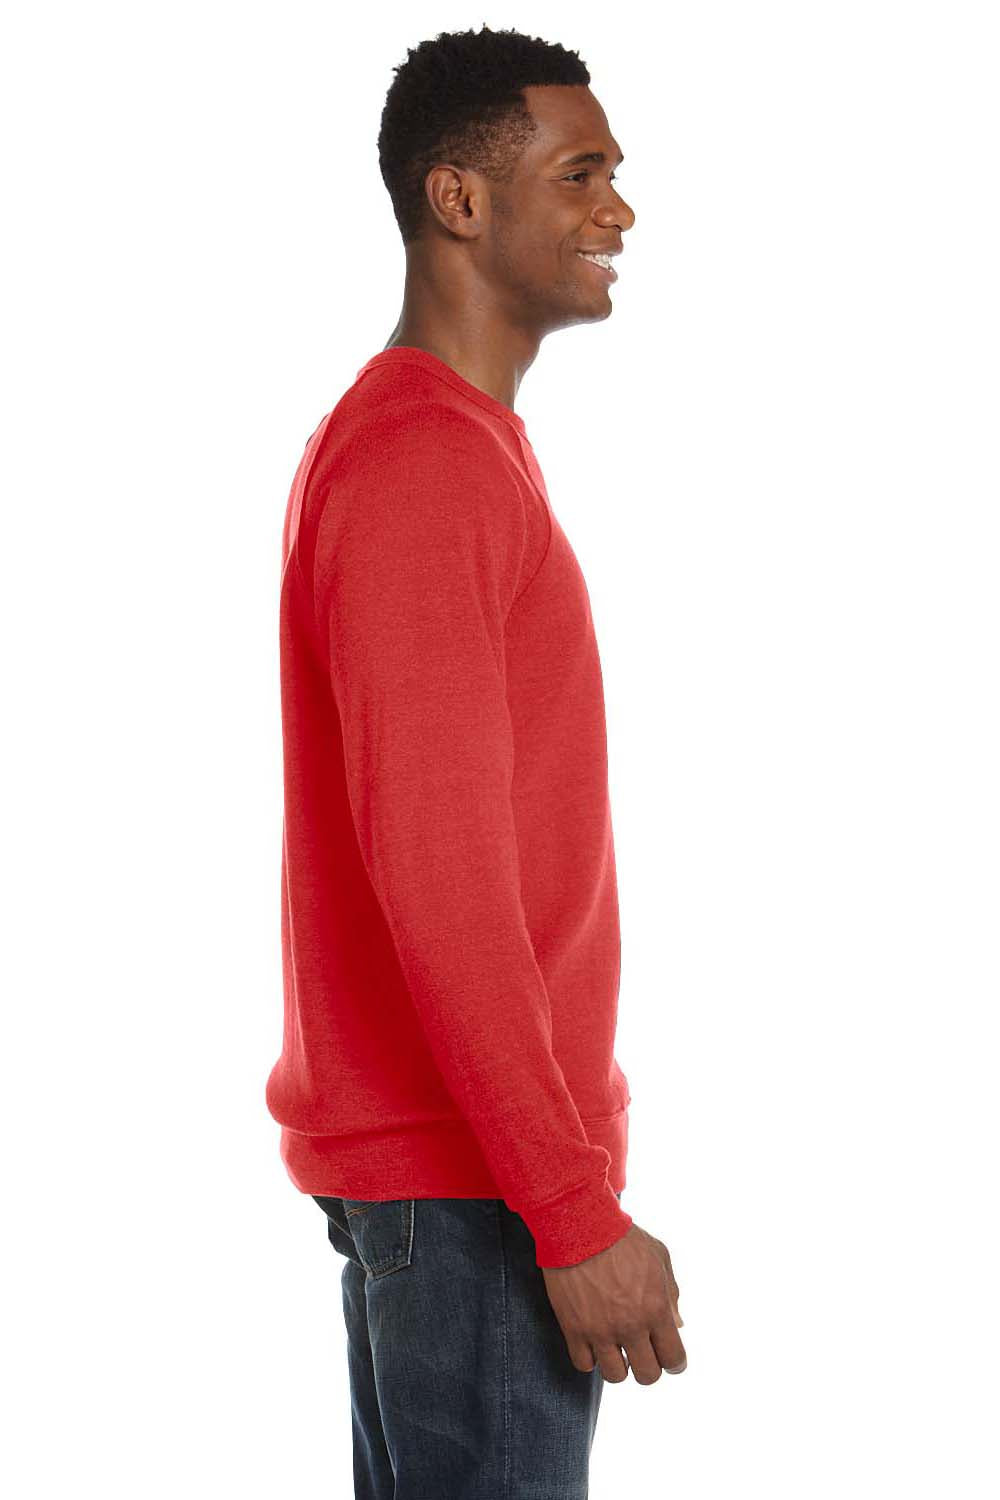 Bella + Canvas BC3901/3901 Mens Sponge Fleece Crewneck Sweatshirt Red Model Side